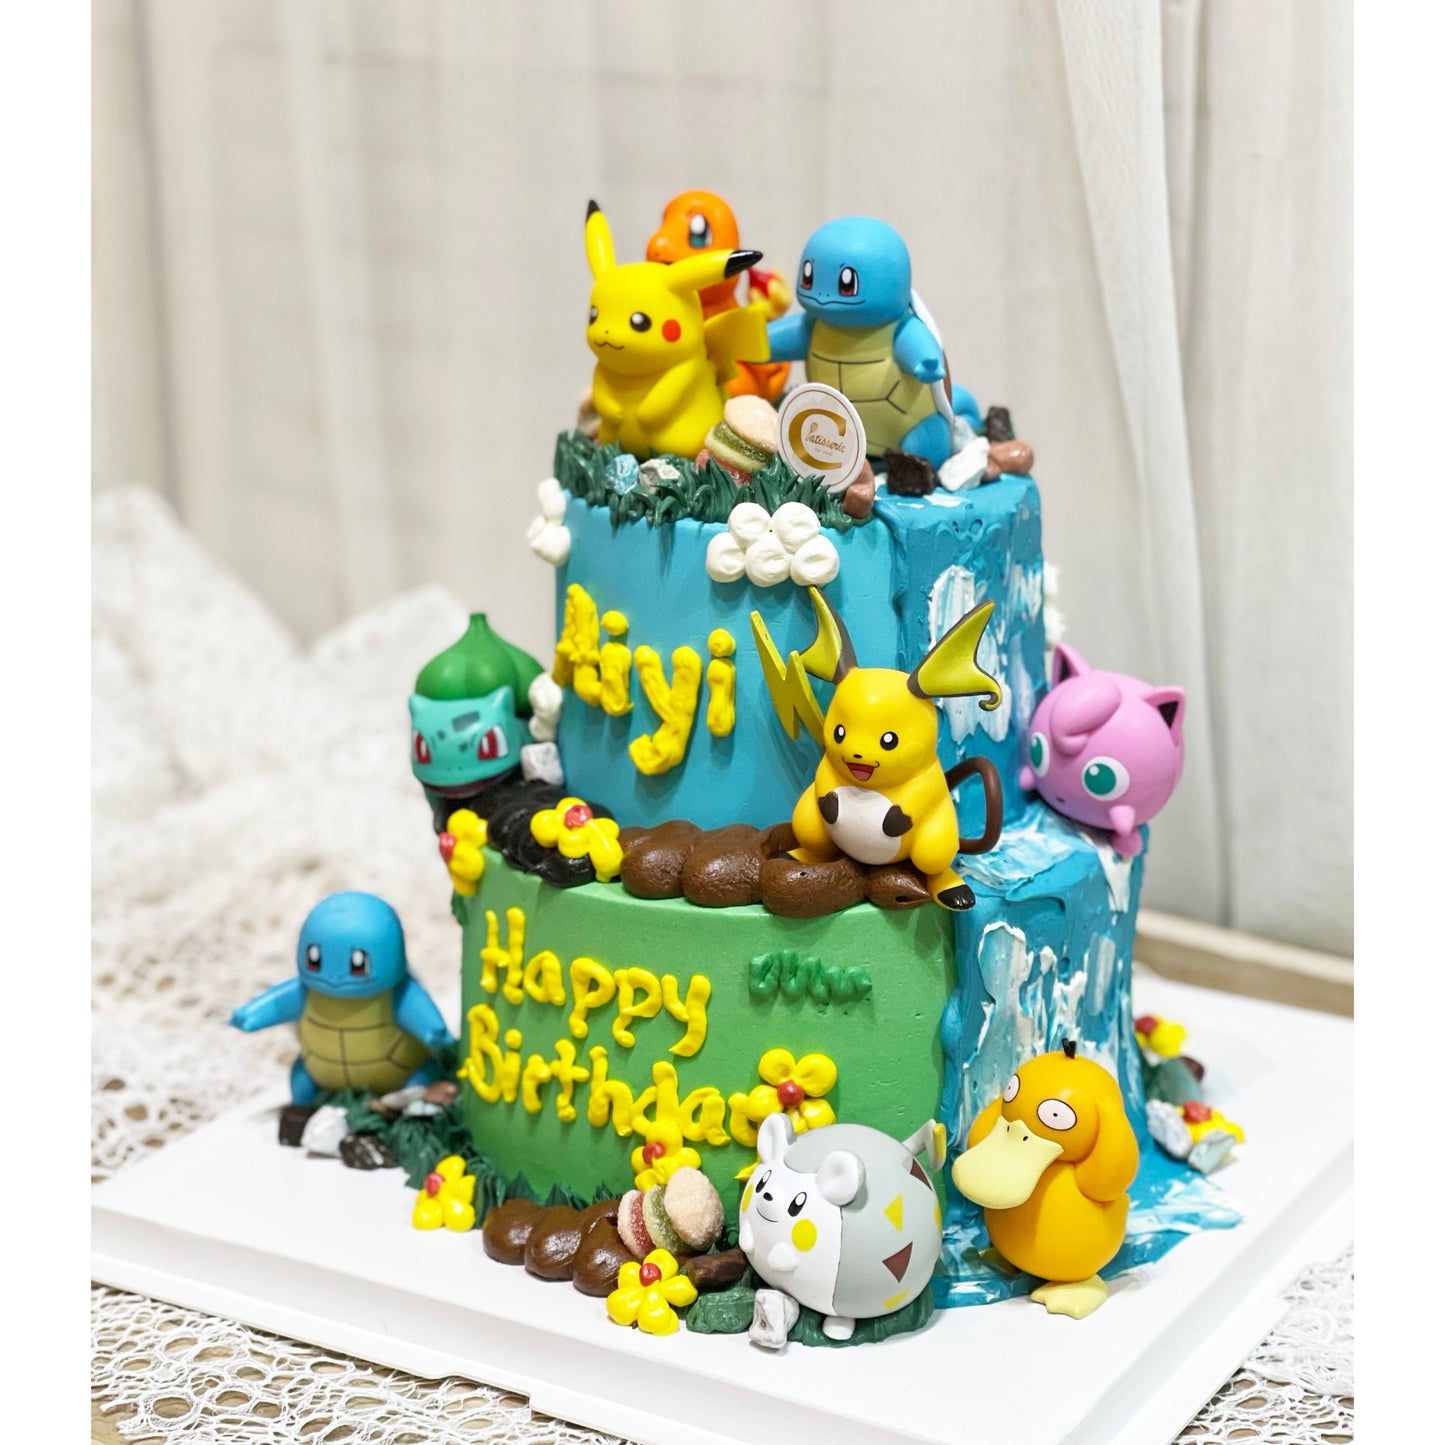 Pikachu Inspired Cake: Pika-Pop Party